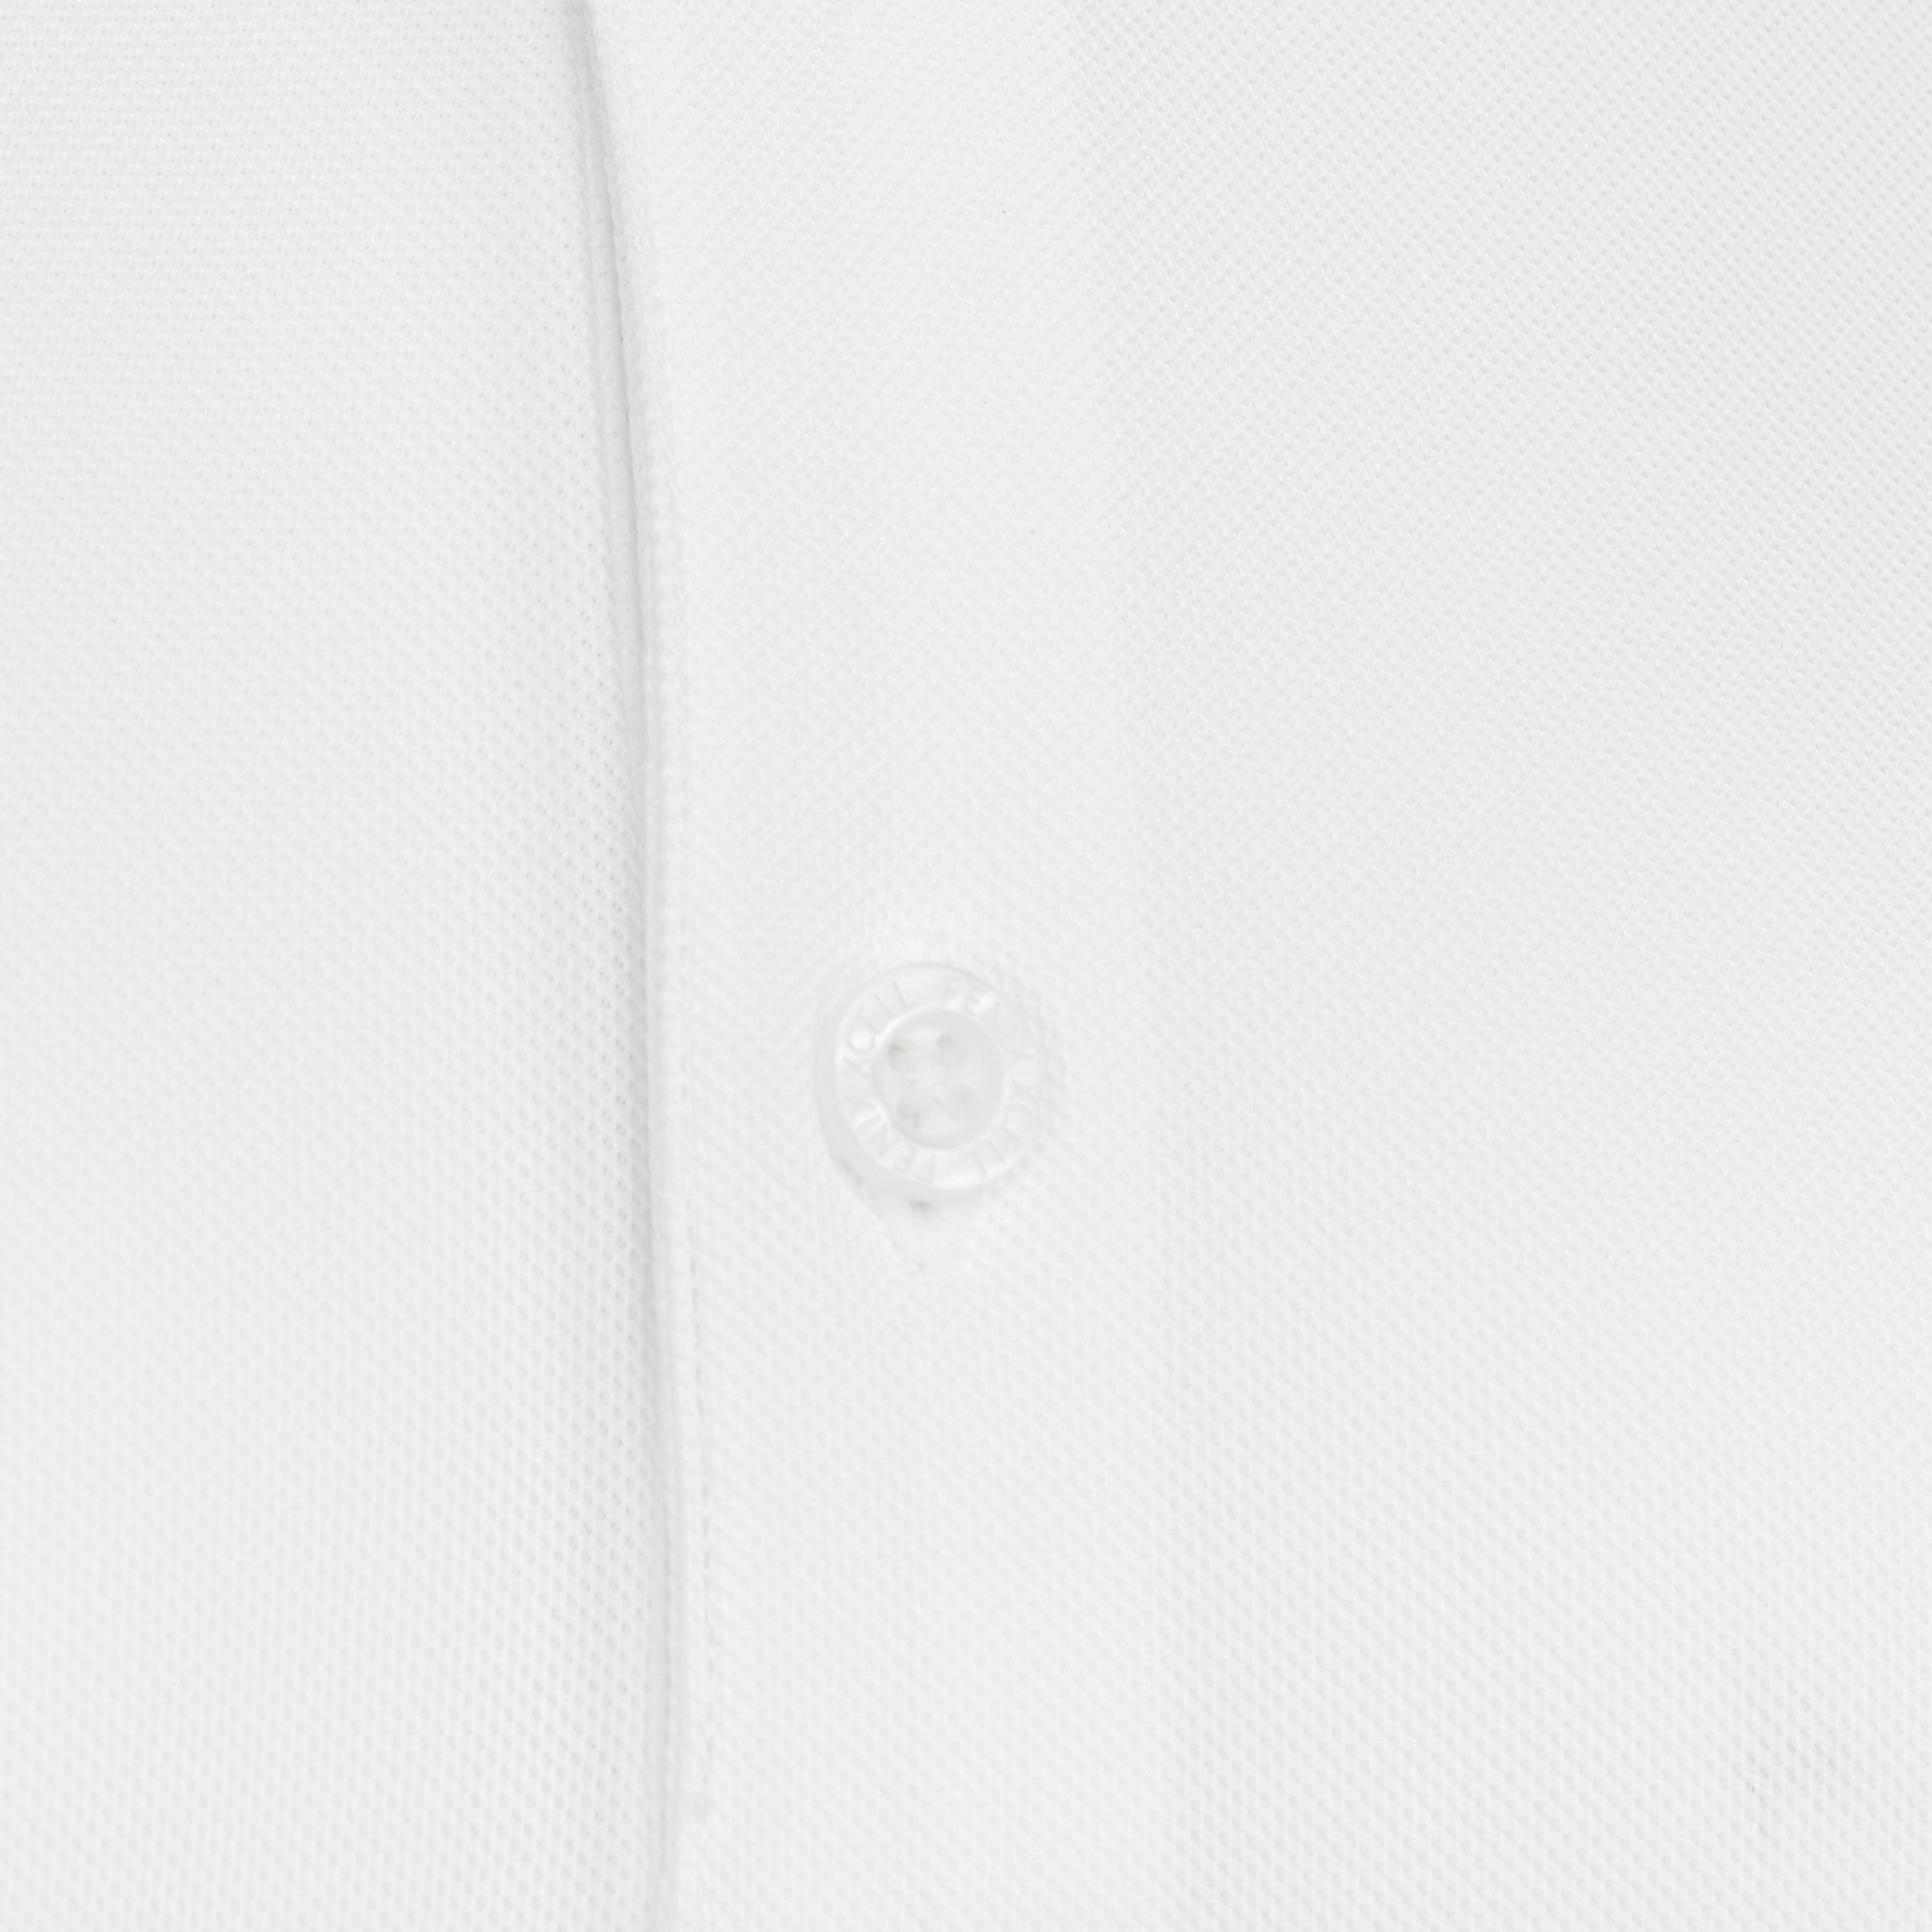 Tay Performance Polo WHITE ■ Fenix x Snell コラボポロシャツ テイ（白）